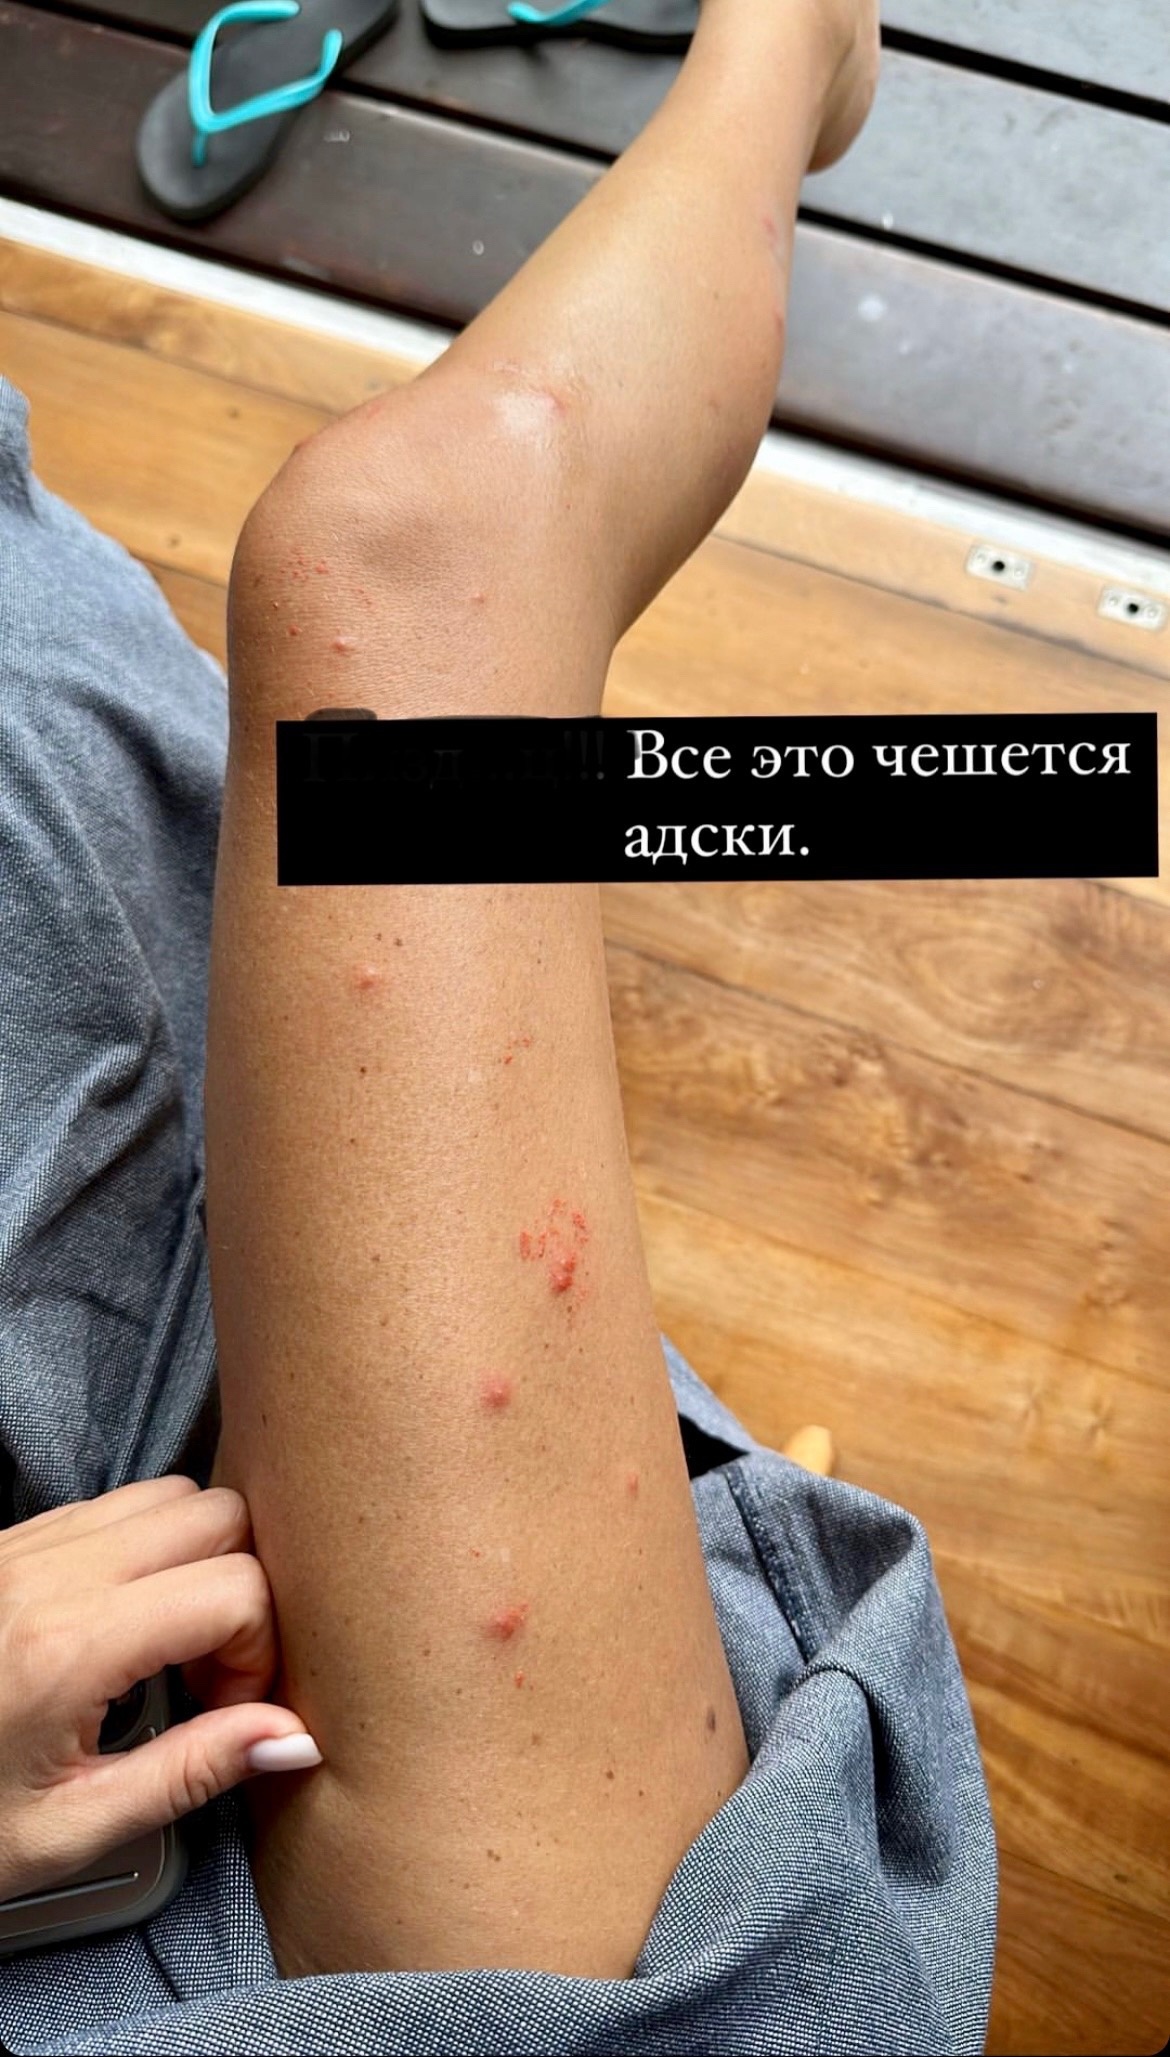 "На теле живого места нет": Ксения Бородина пострадала на пляже